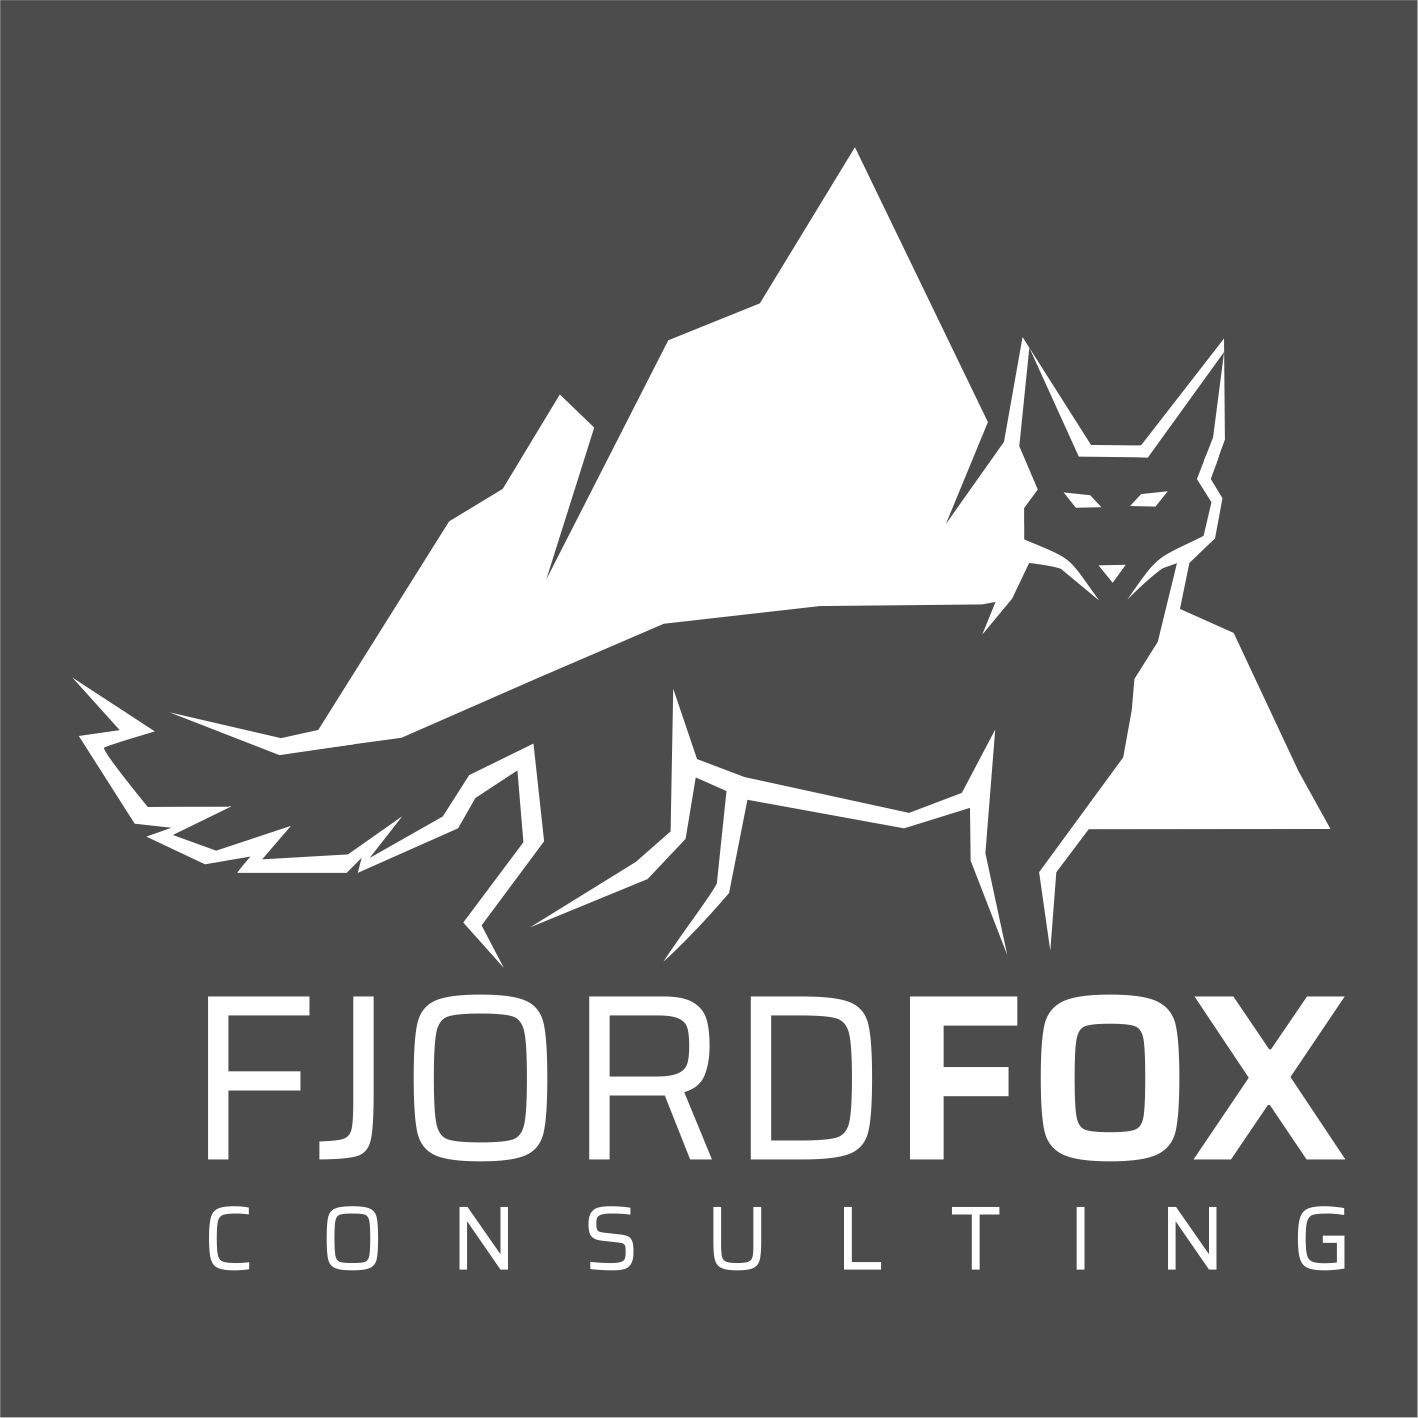 Fjordfox Consulting company logo